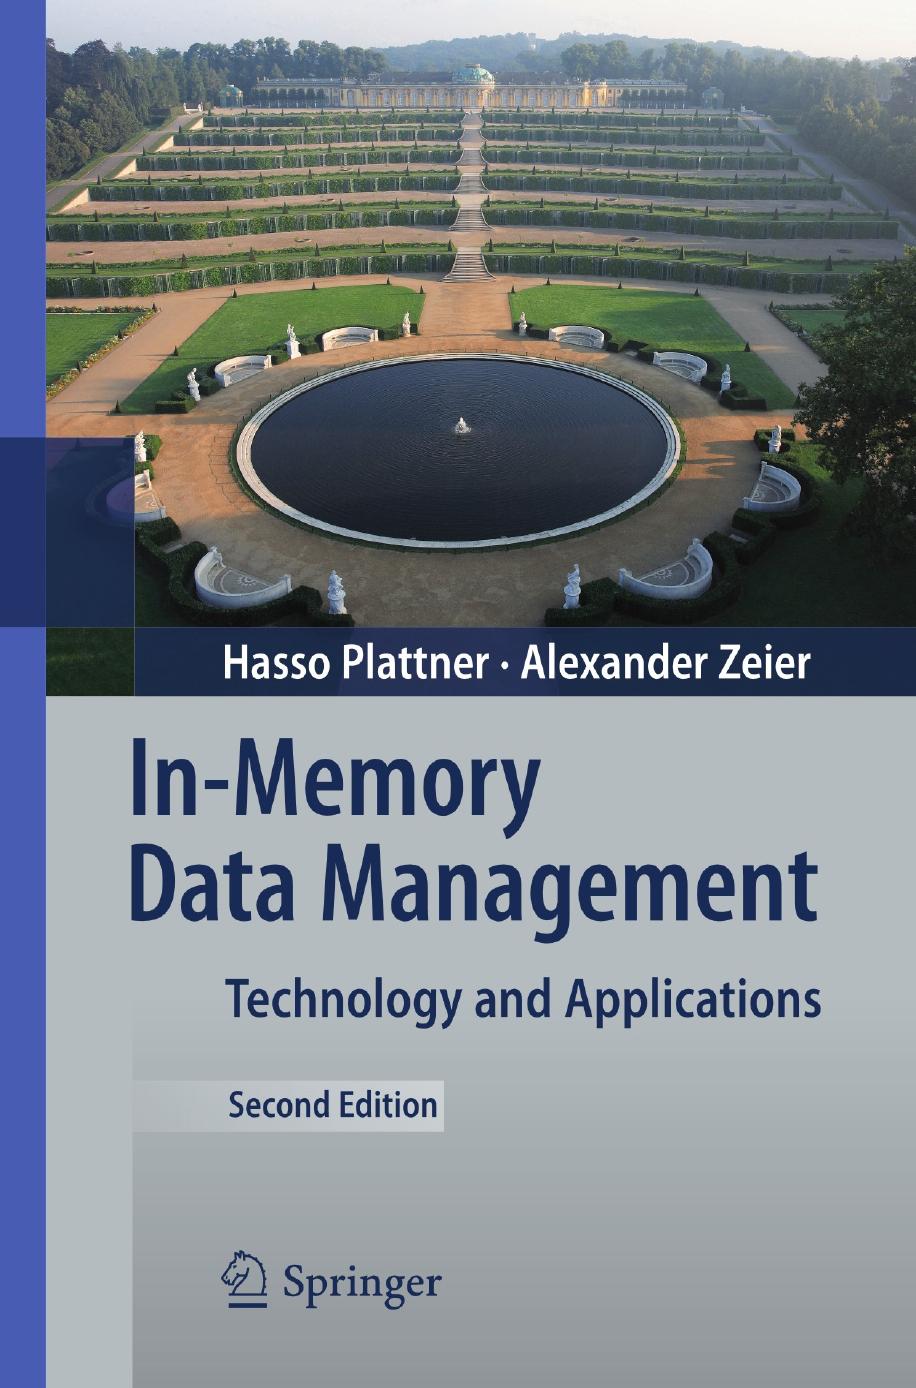 In-Memory Data Management by Hasso Plattner